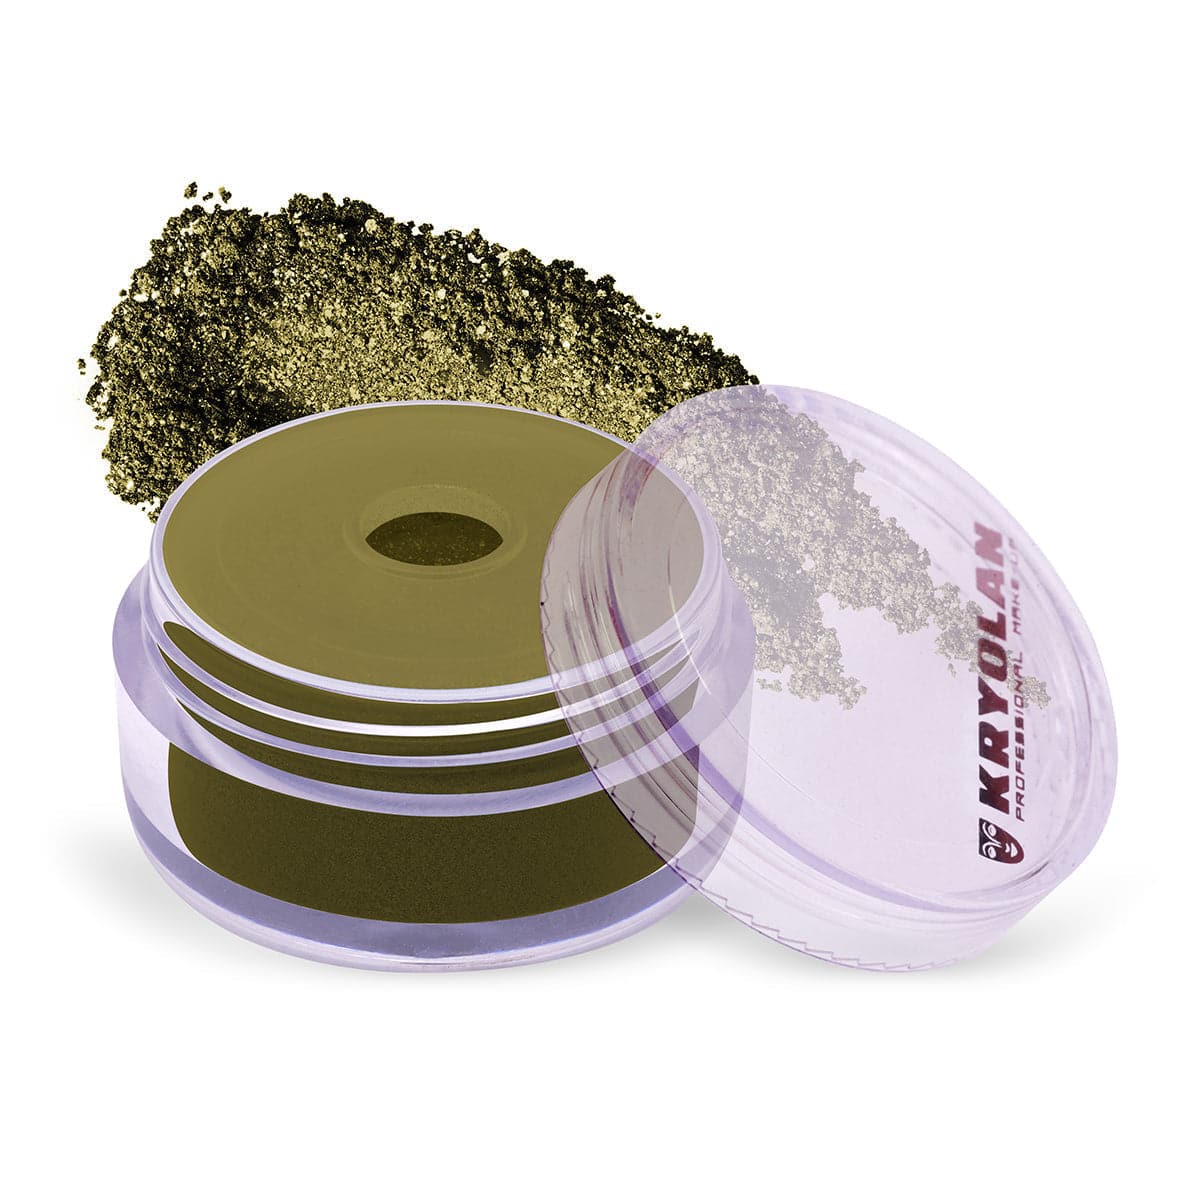 Kryolan Satin Powder - 223 Dull Gold - Premium Health & Beauty from Kryolan - Just Rs 2730.00! Shop now at Cozmetica